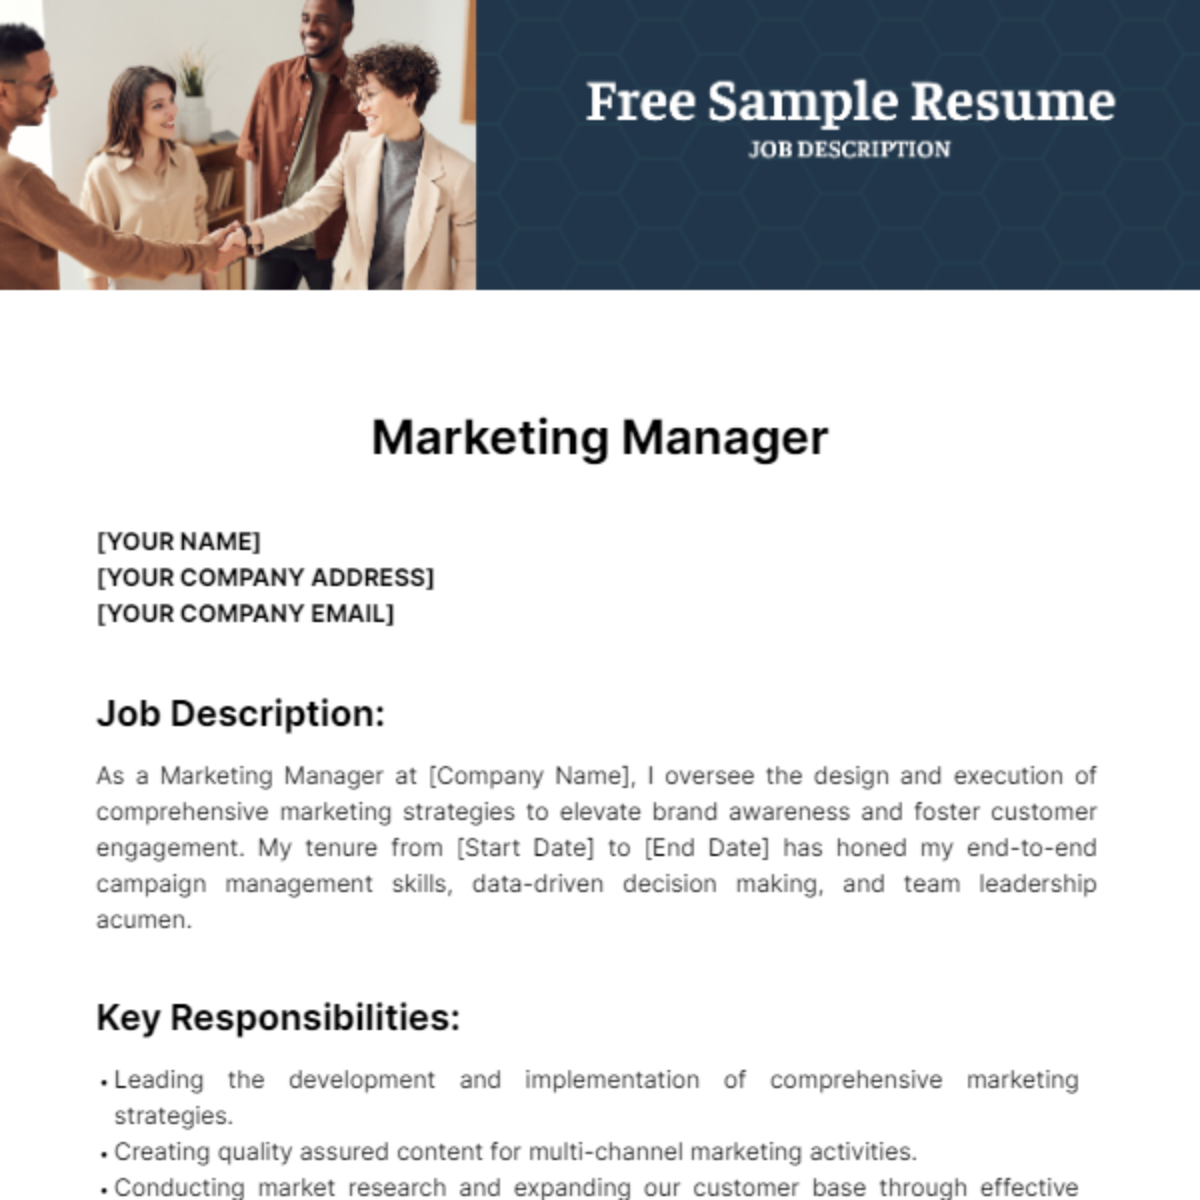 Free Sample Resume Job Description Template